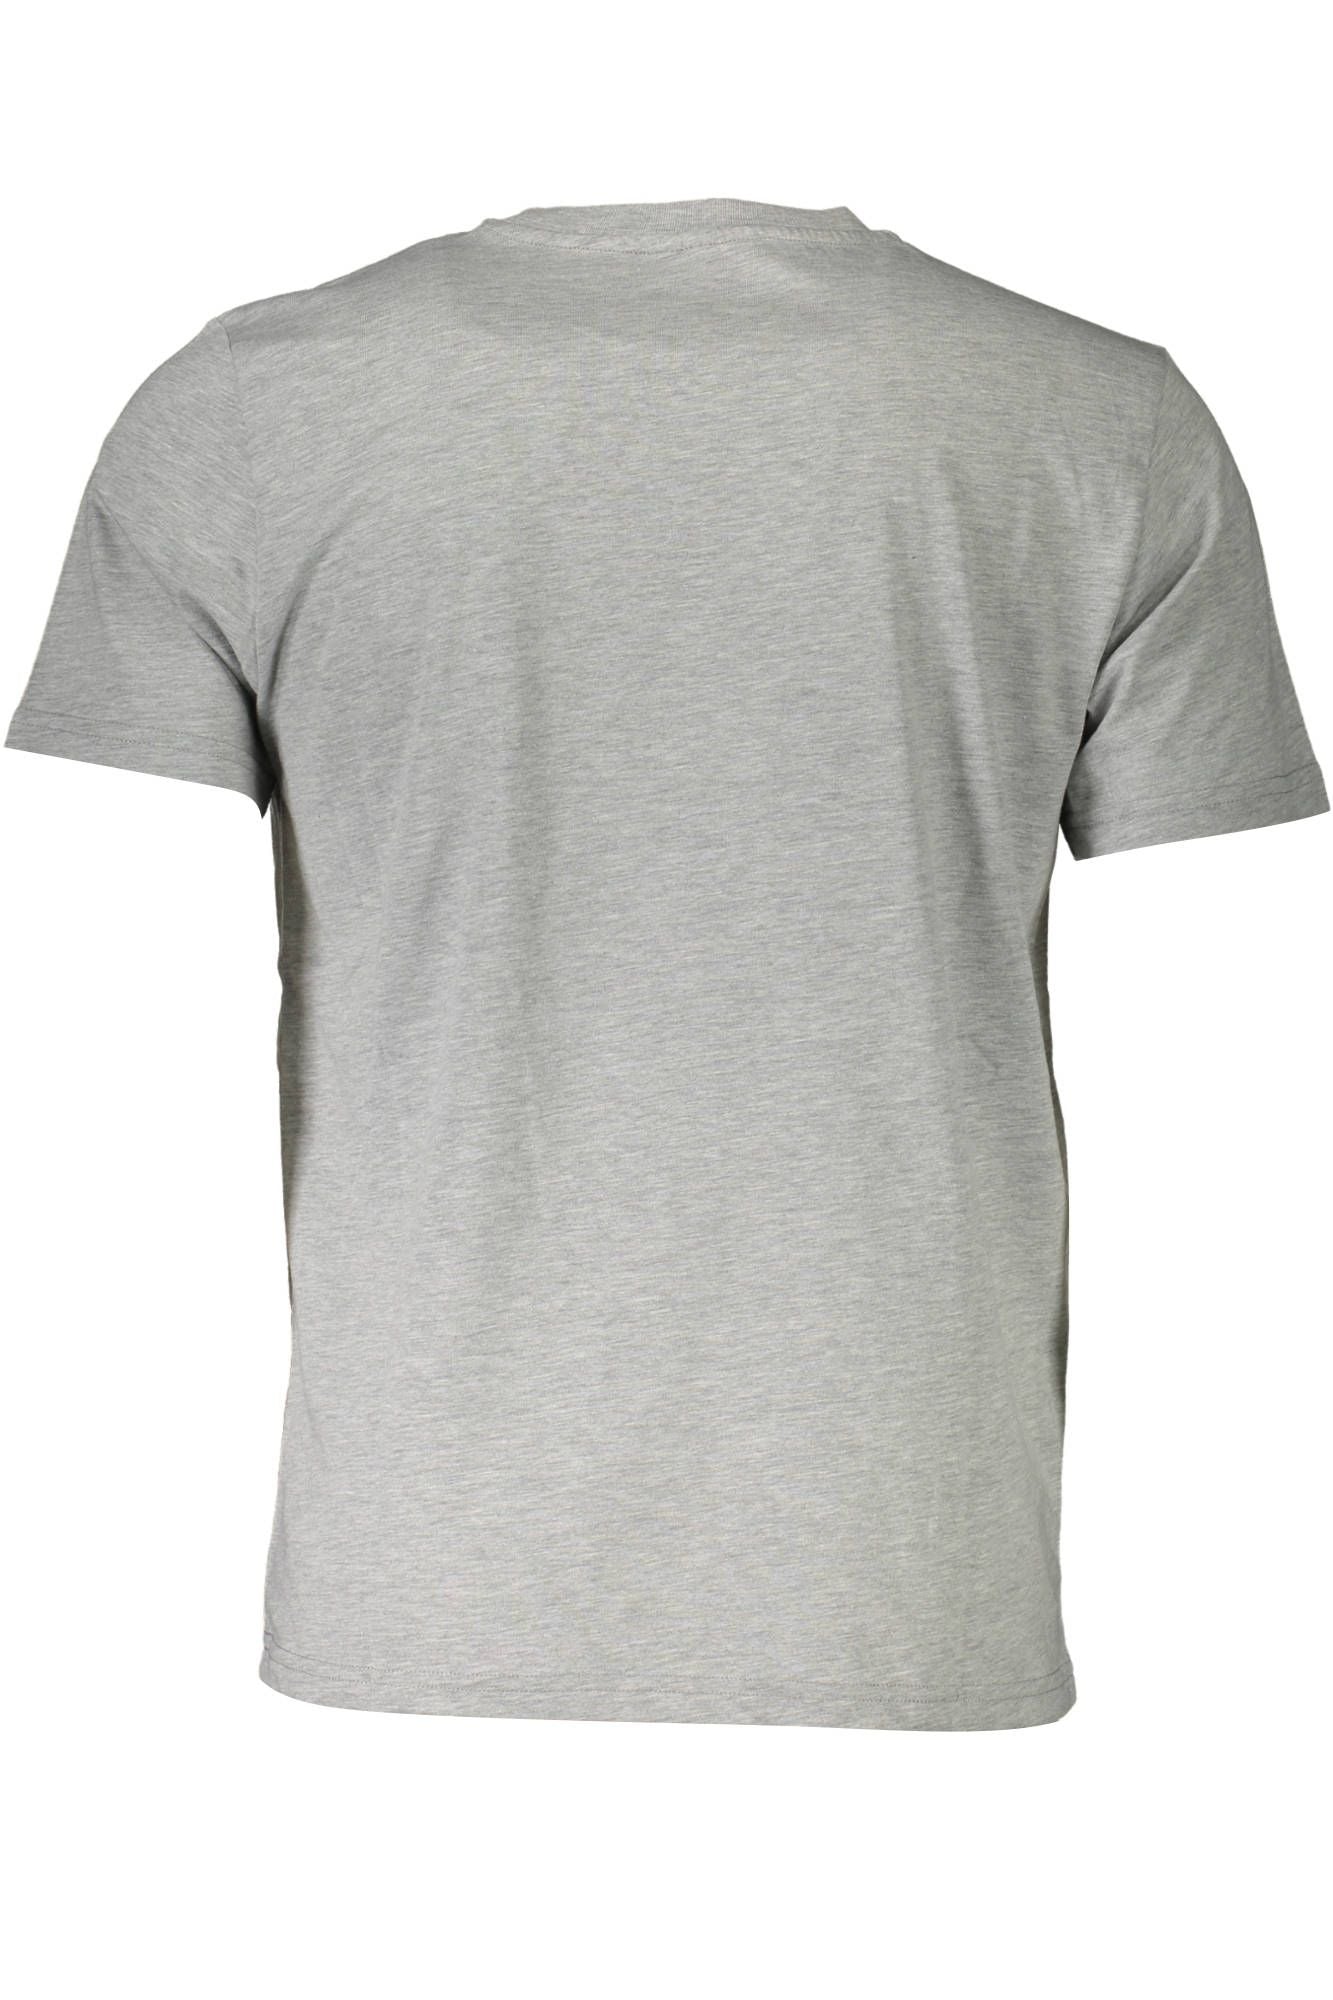 Sleek Gray Cotton T-Shirt with Iconic Print